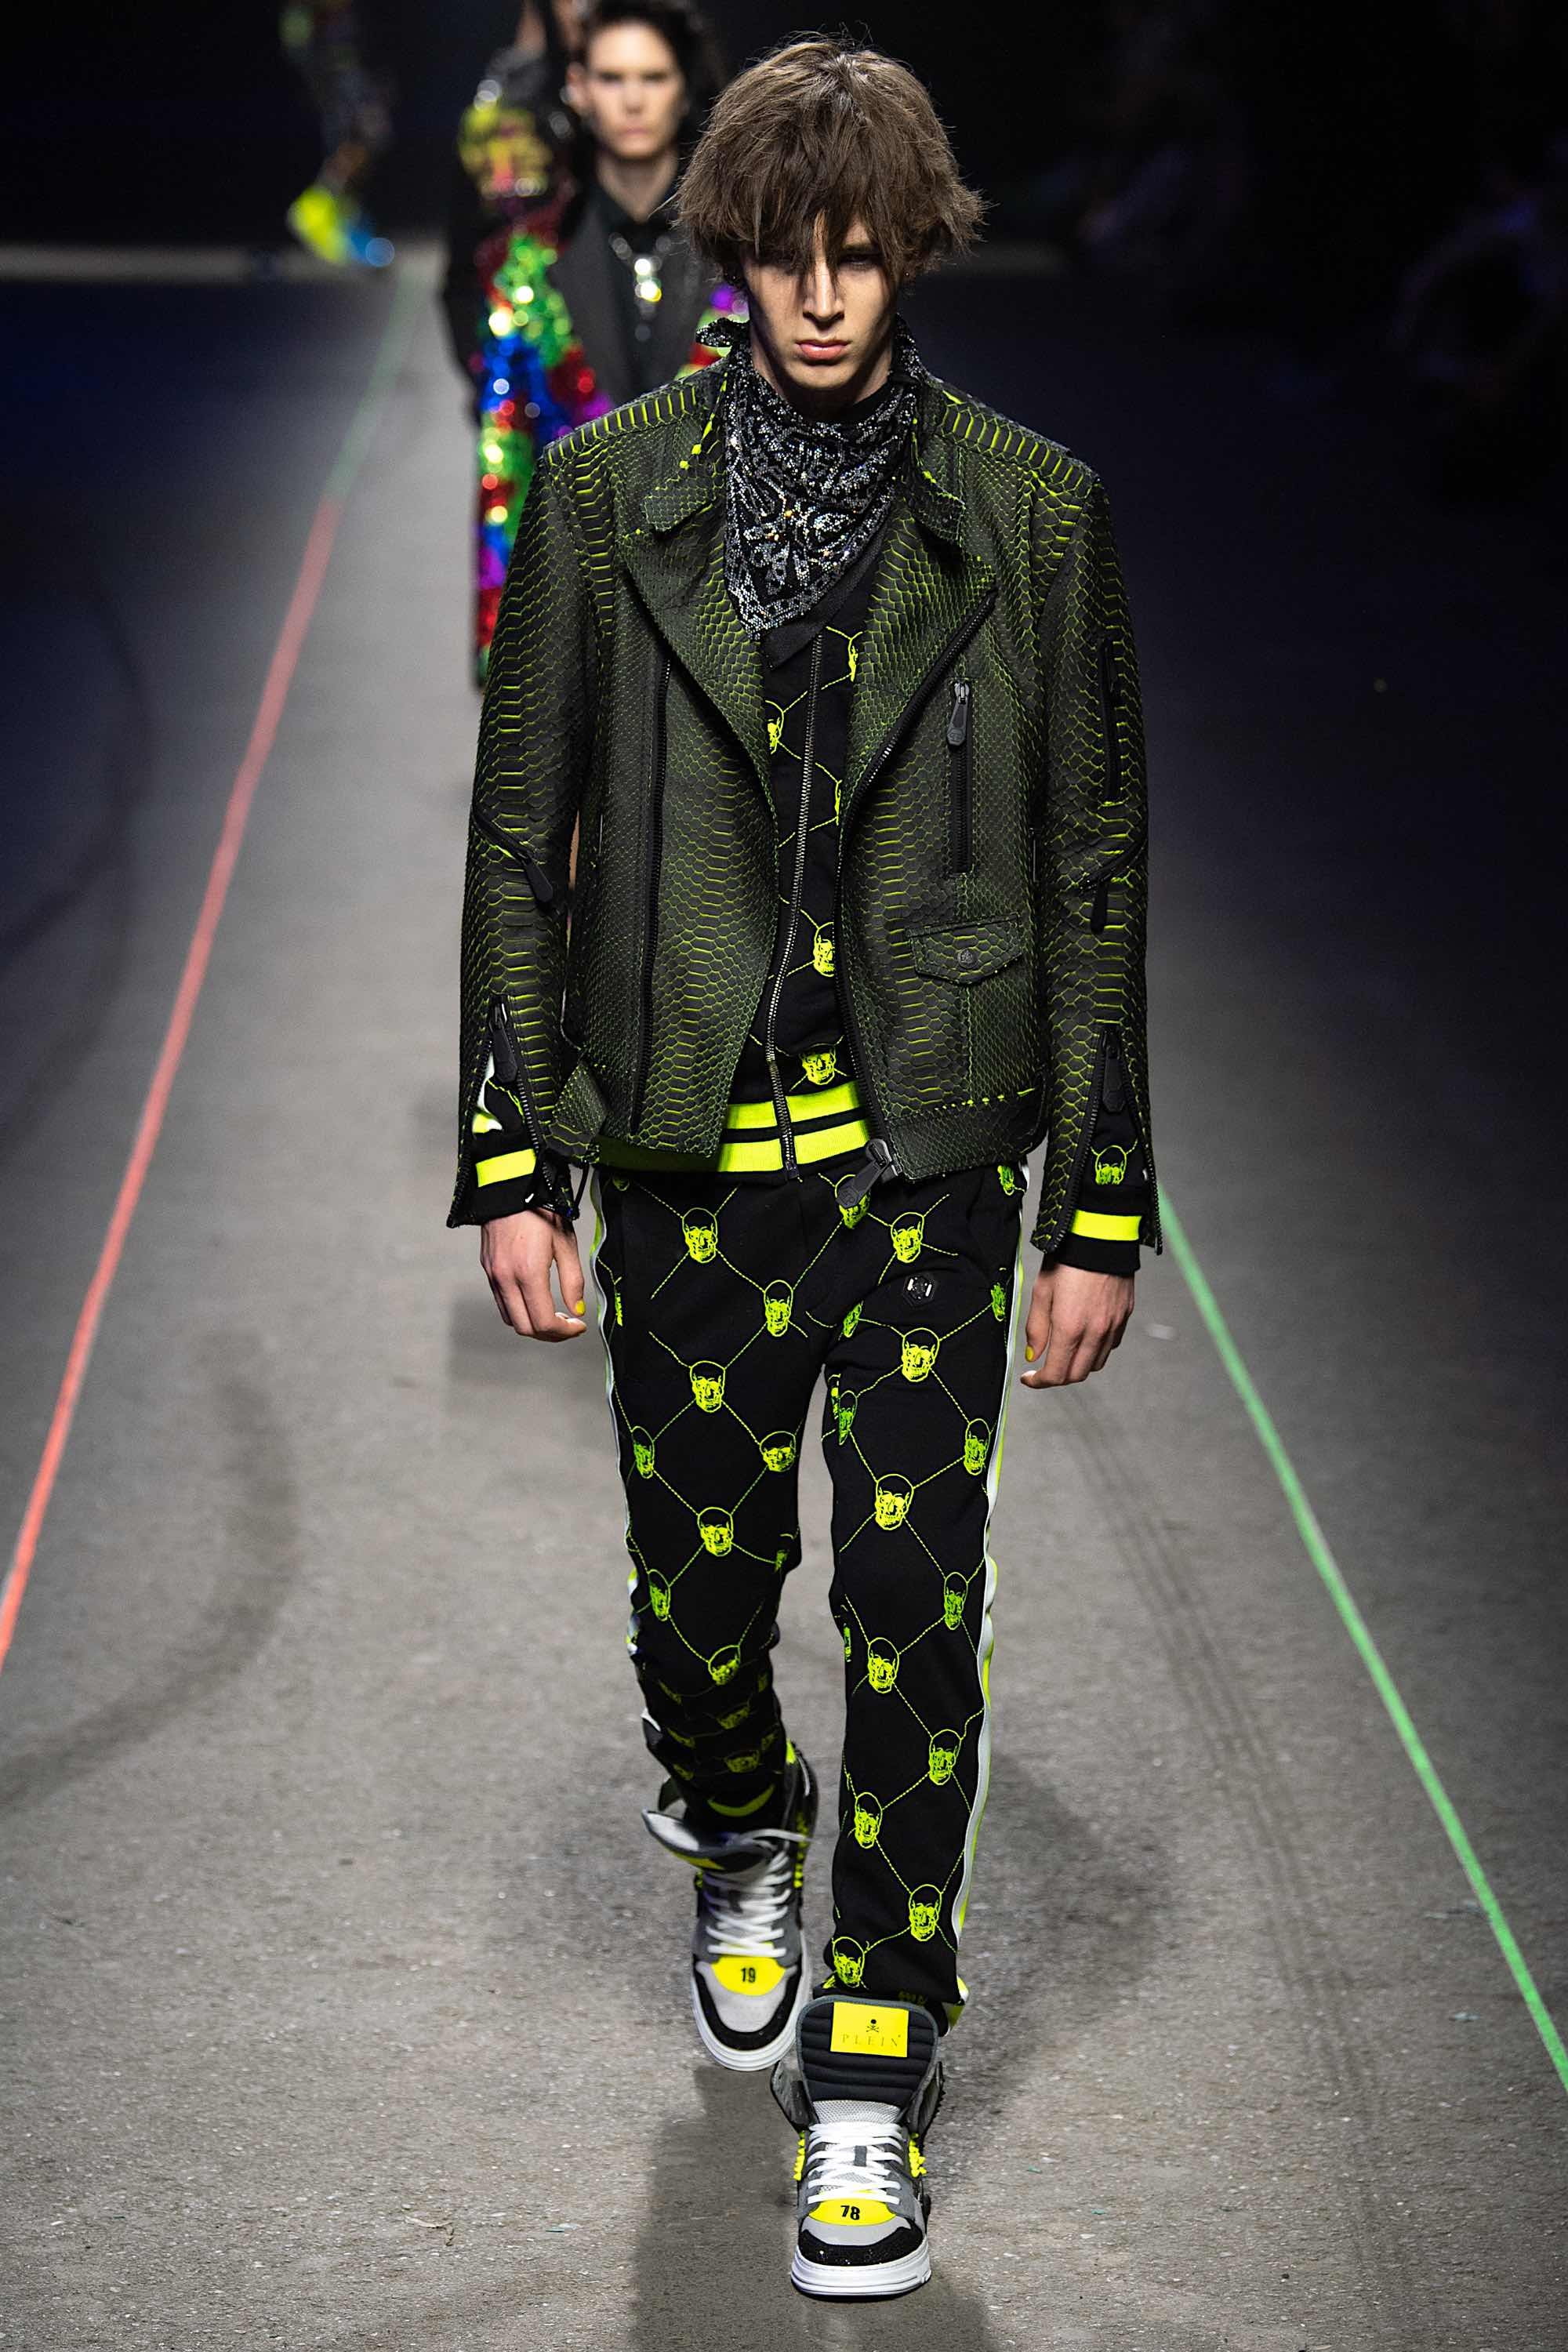 Philipp Plein SS21 menswear #19 - Tagwalk: The Fashion Search Engine